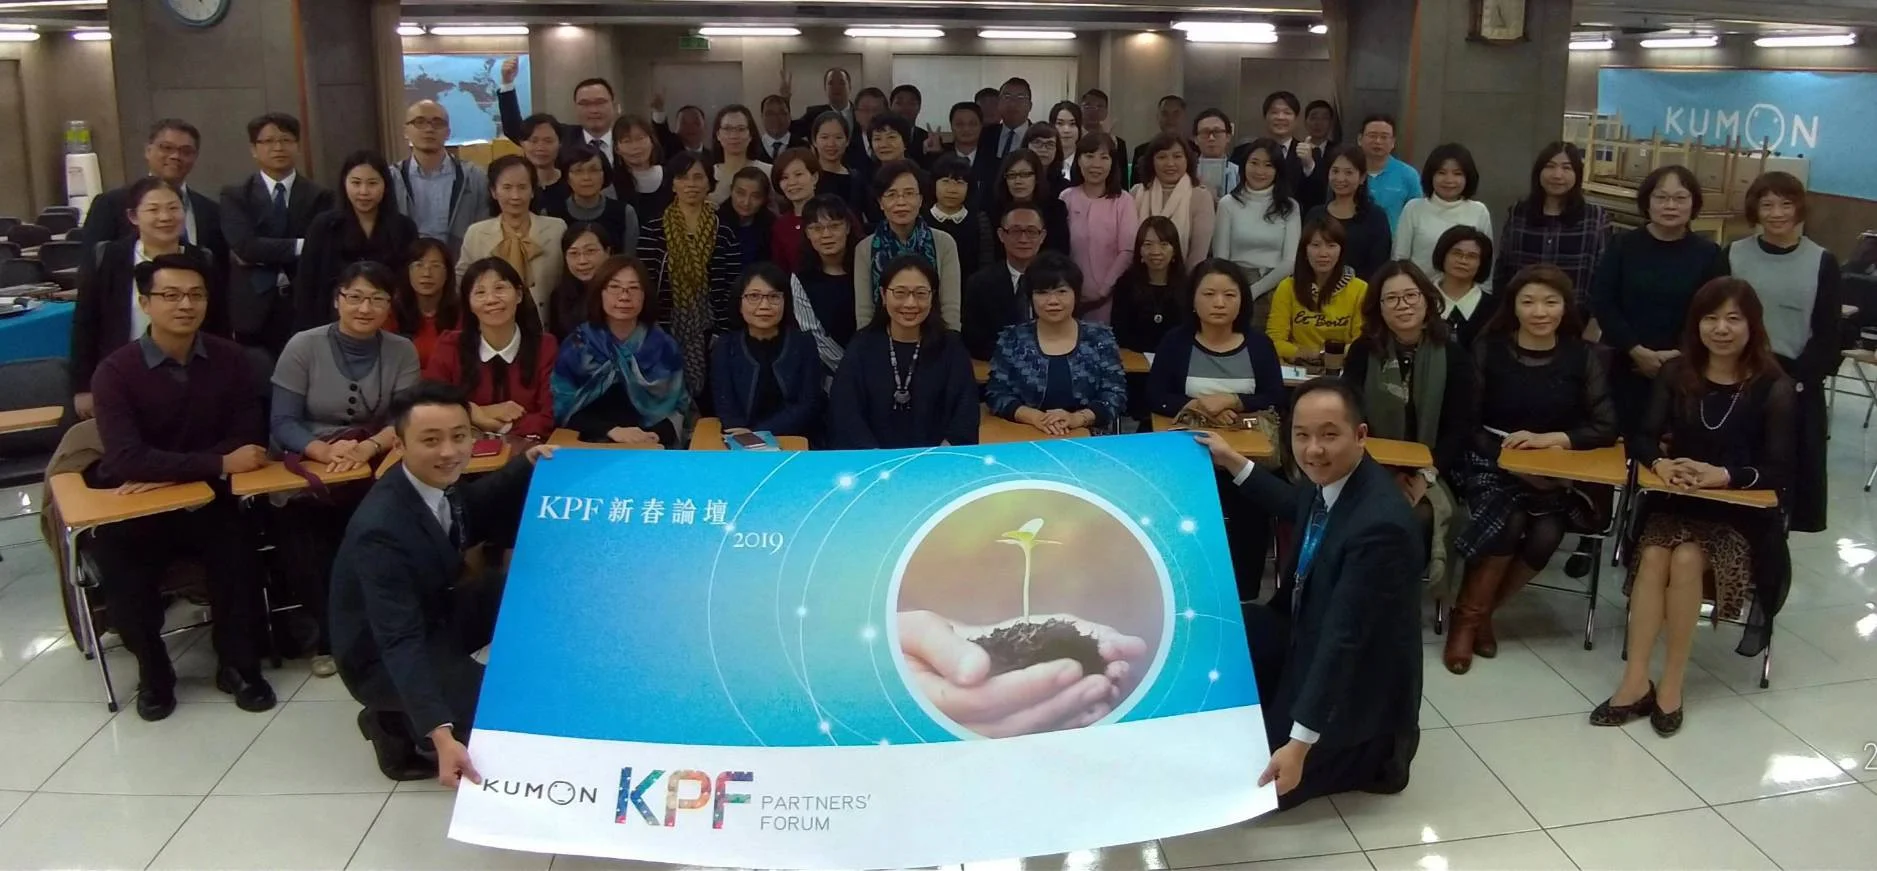 1/13 Kumon Partners' Forum